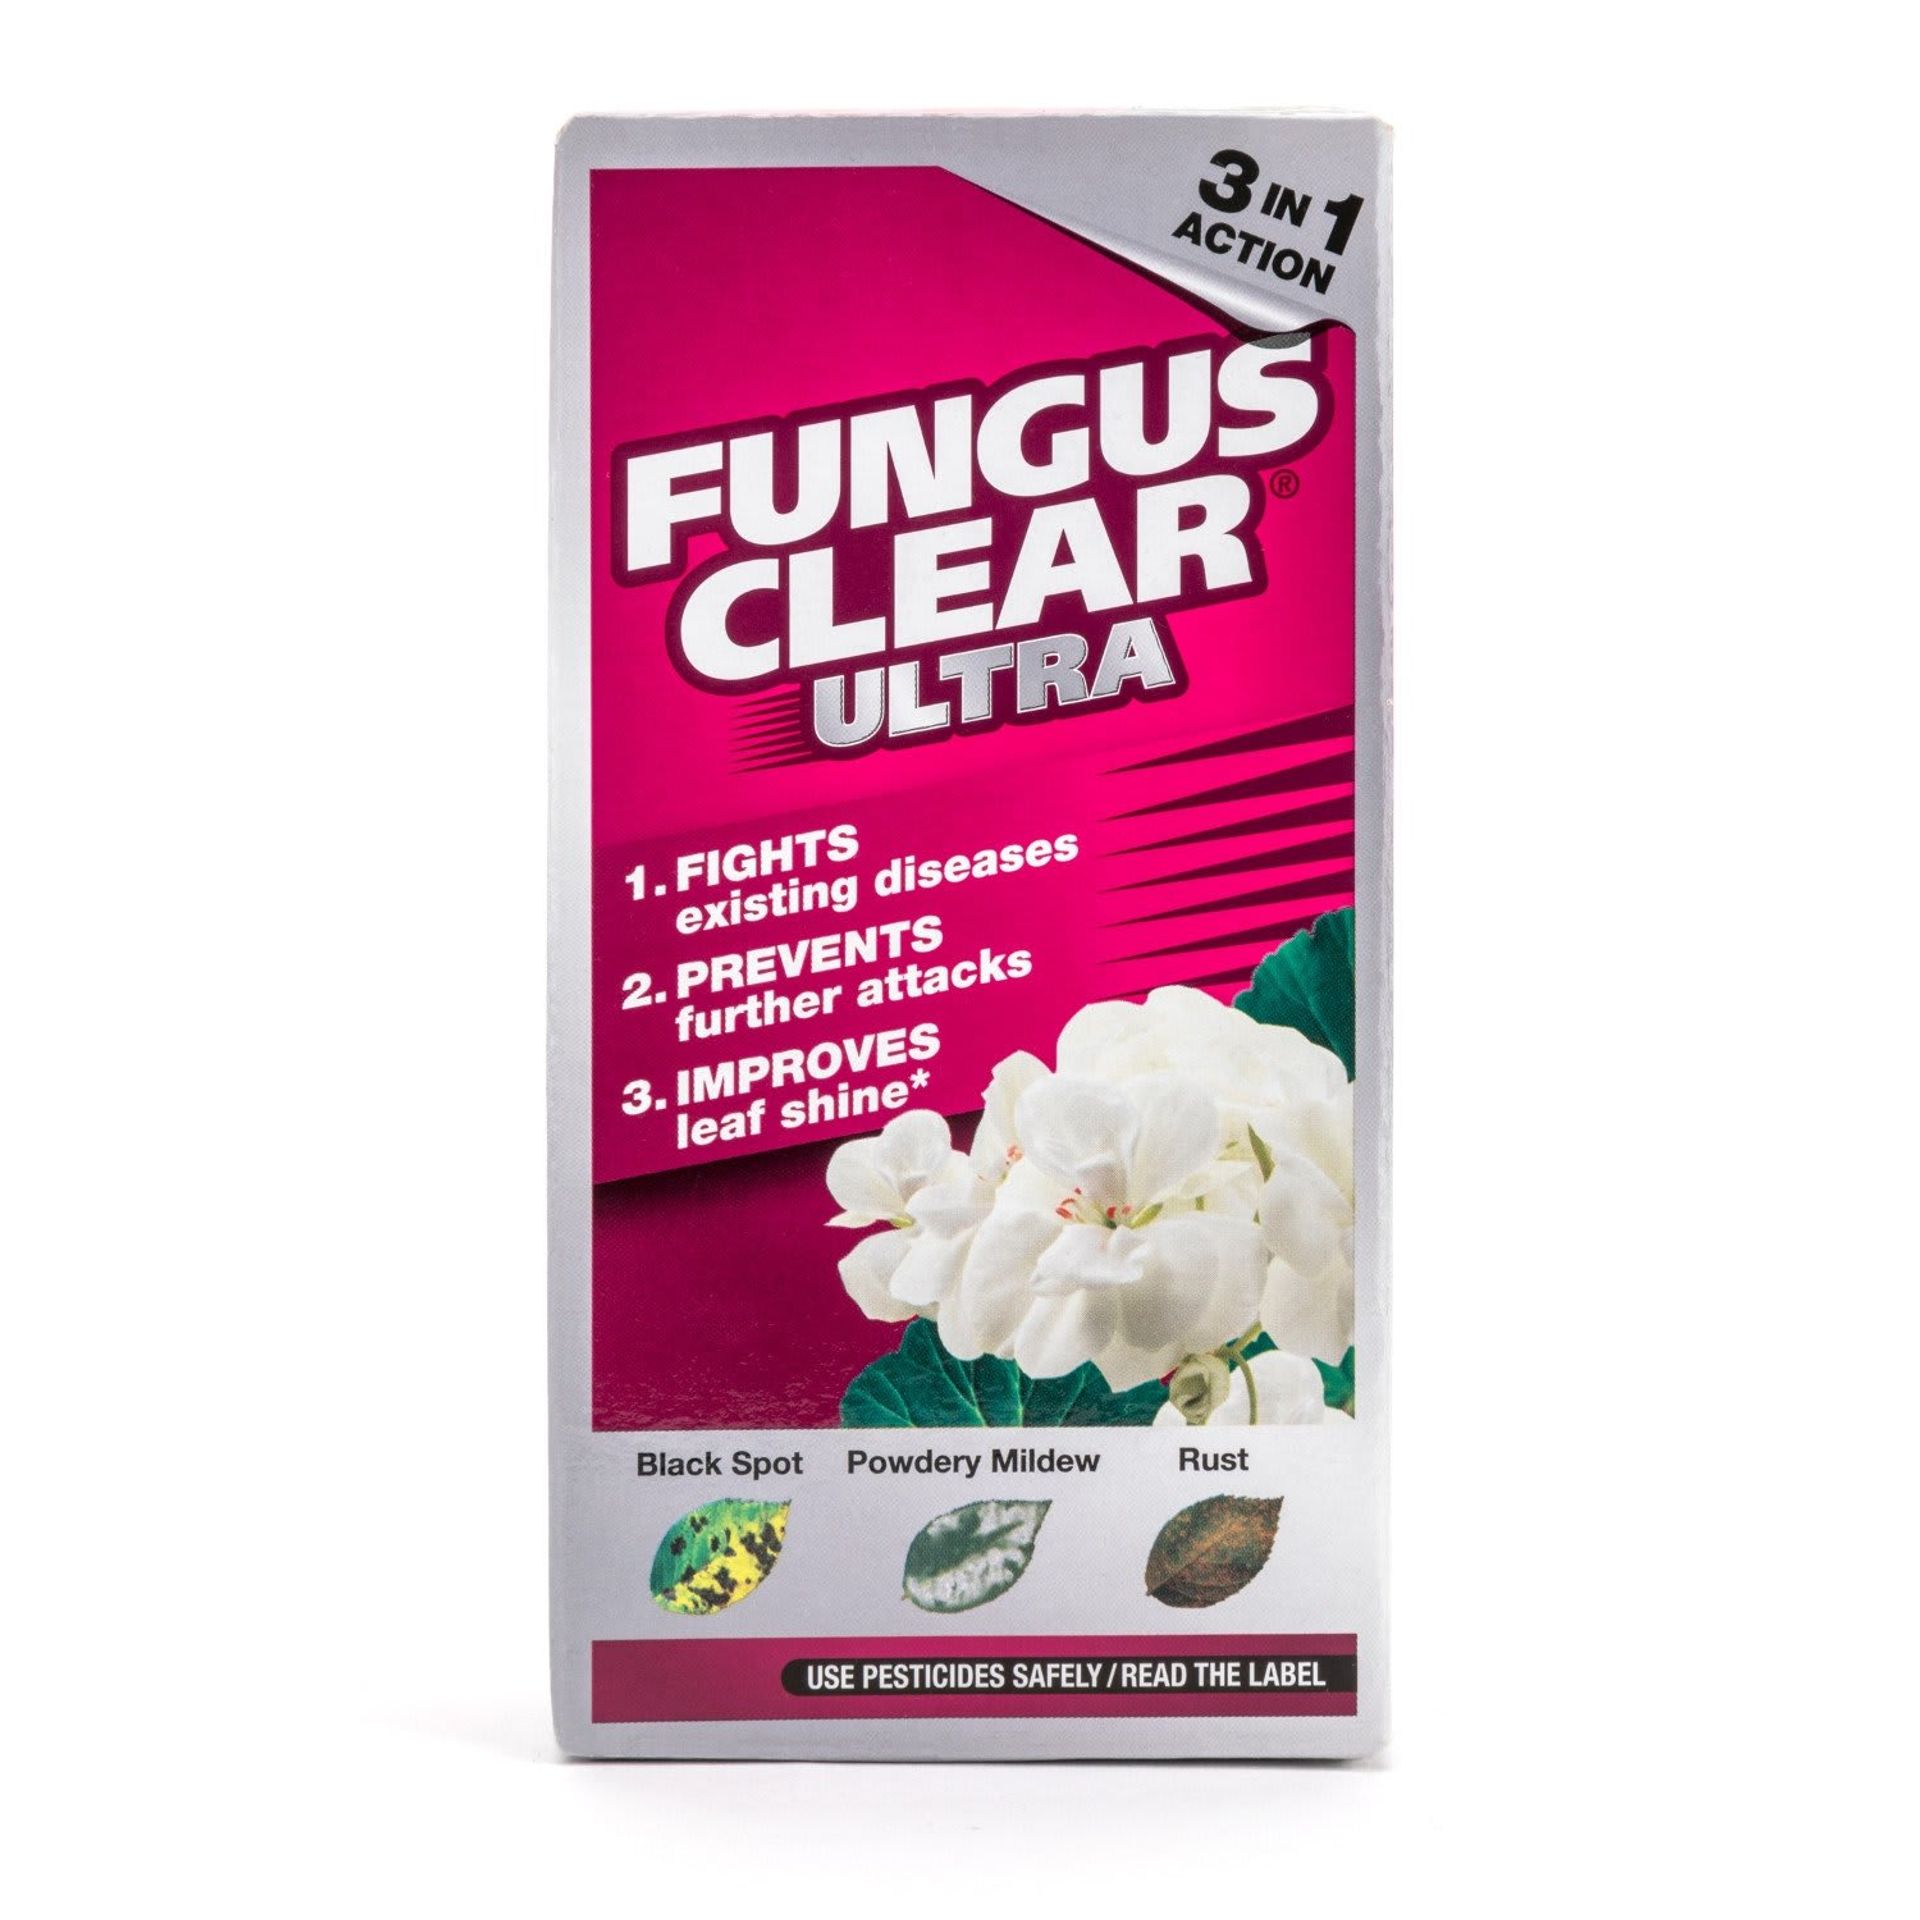 Fungus Clear Ultra